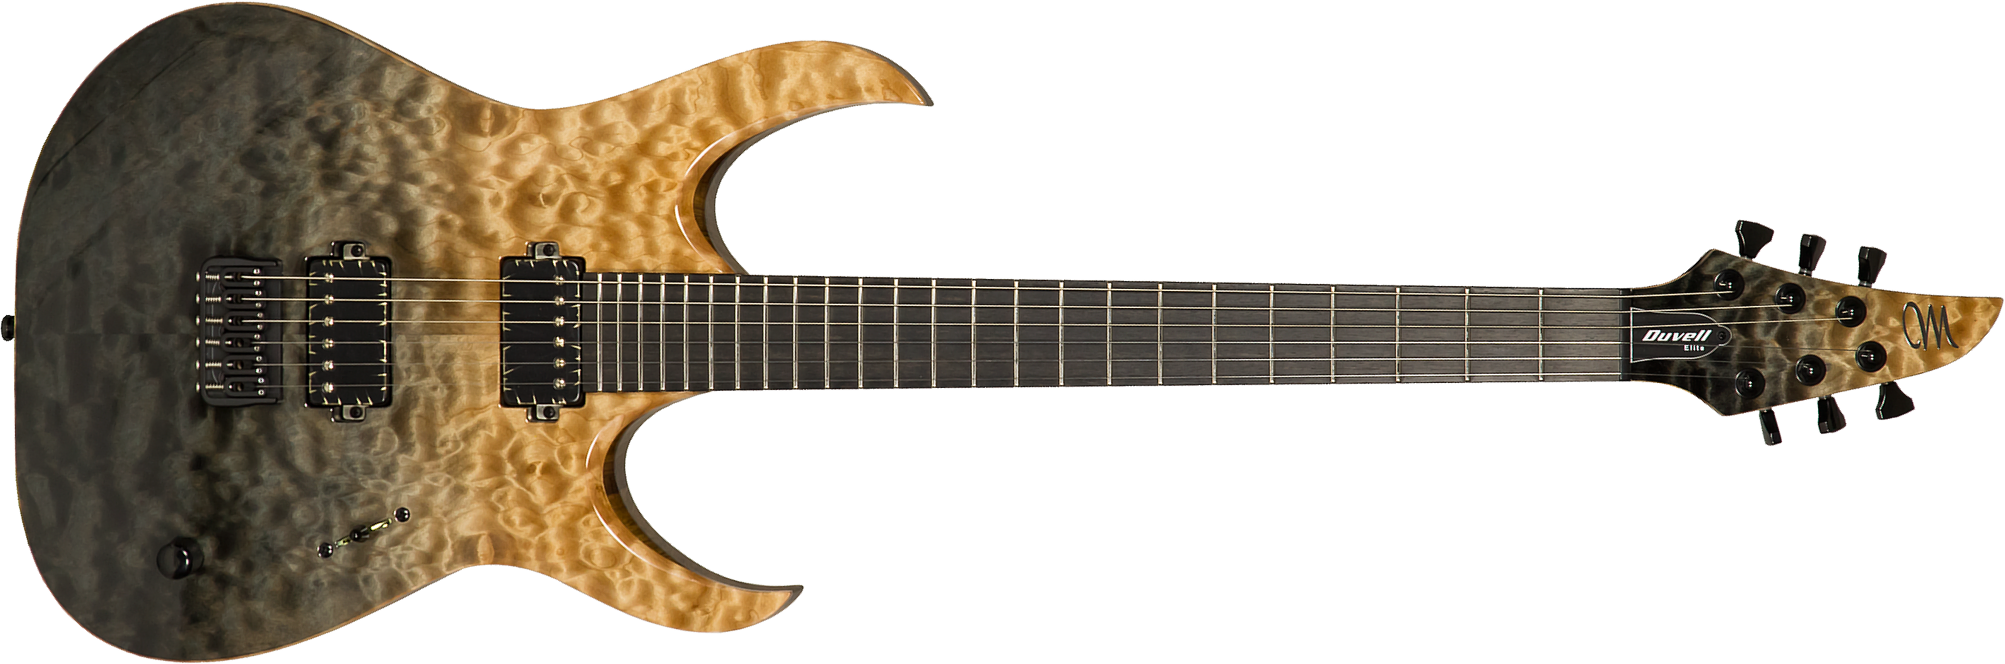 Mayones Guitars Duvell Elite 6 2h Seymour Duncan Ht Eb #df2106528 - Natural & Graphite - Guitarra electrica metalica - Main picture